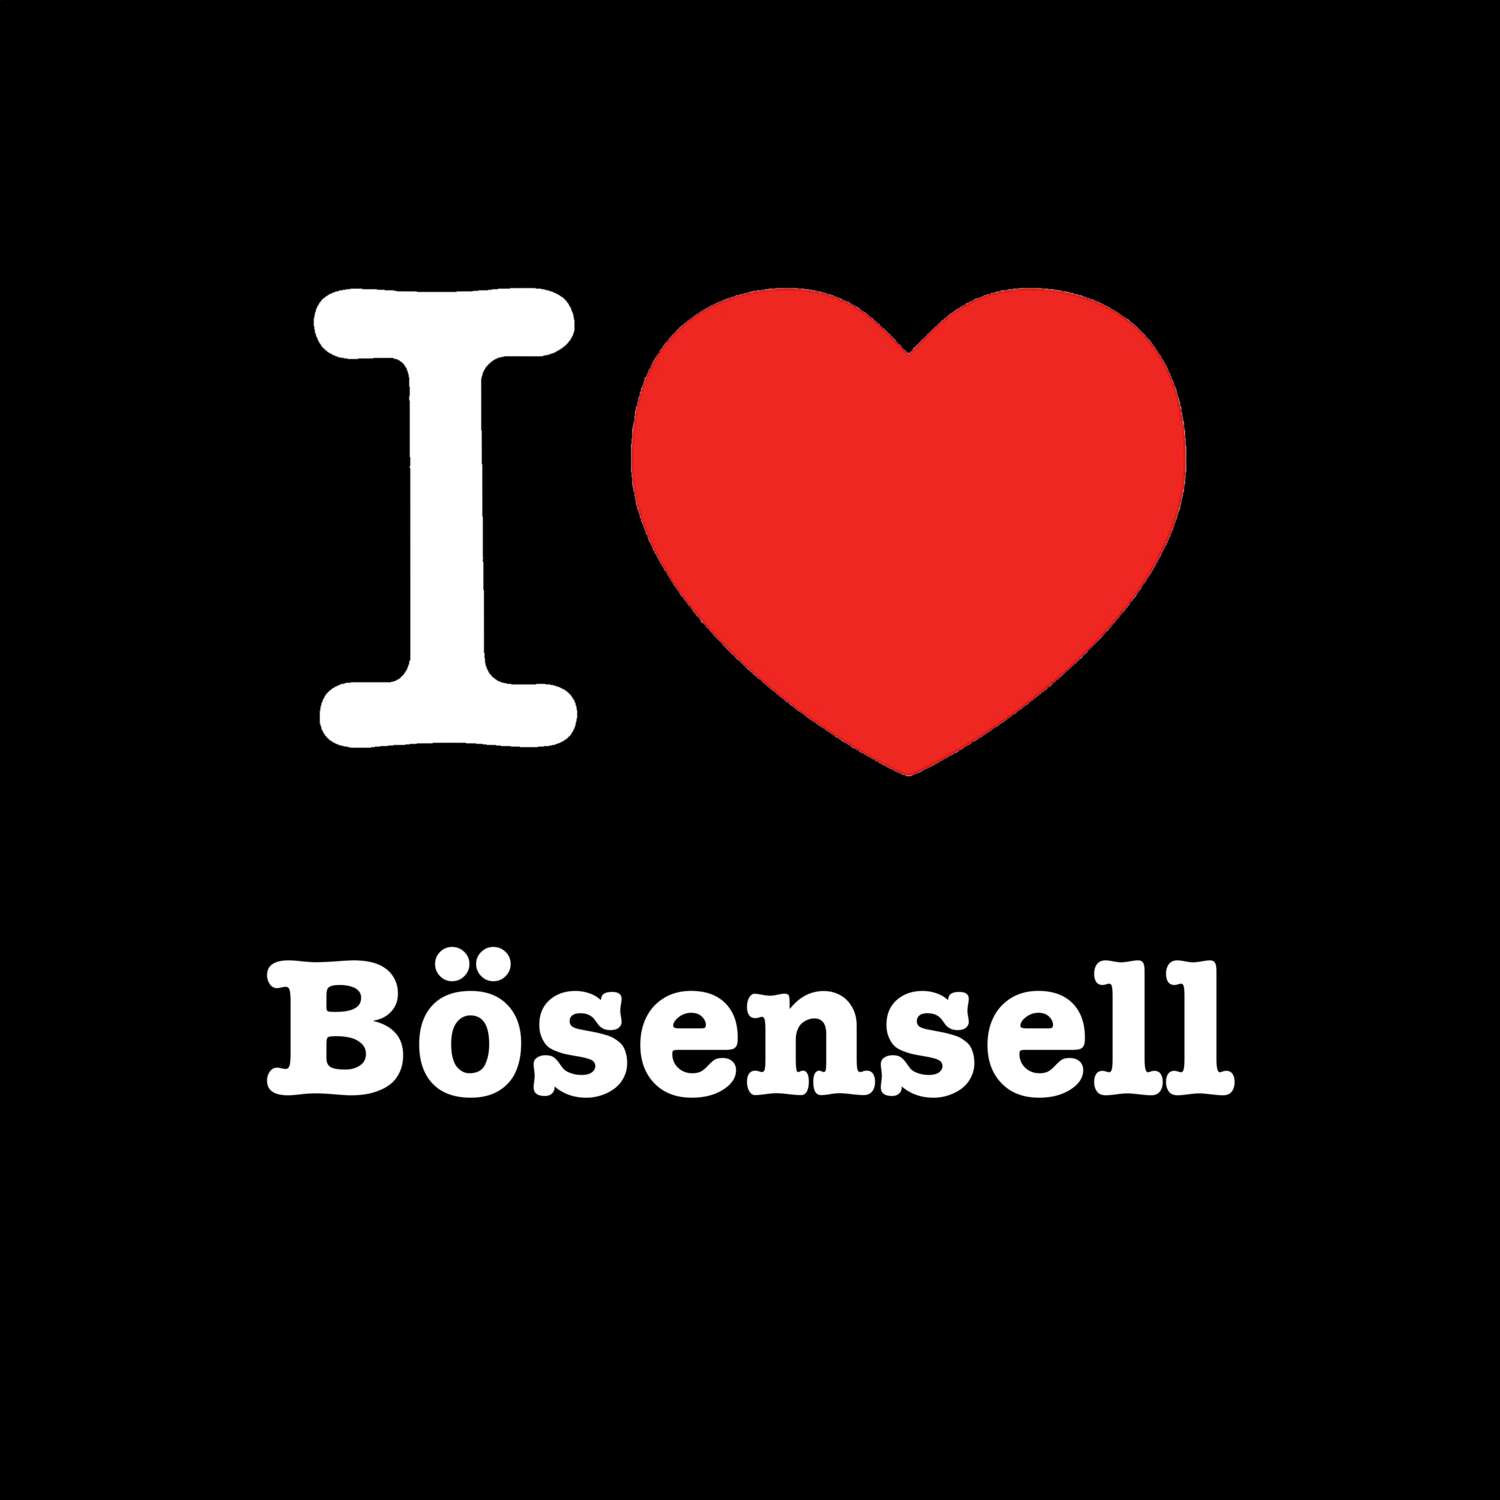 Bösensell T-Shirt »I love«